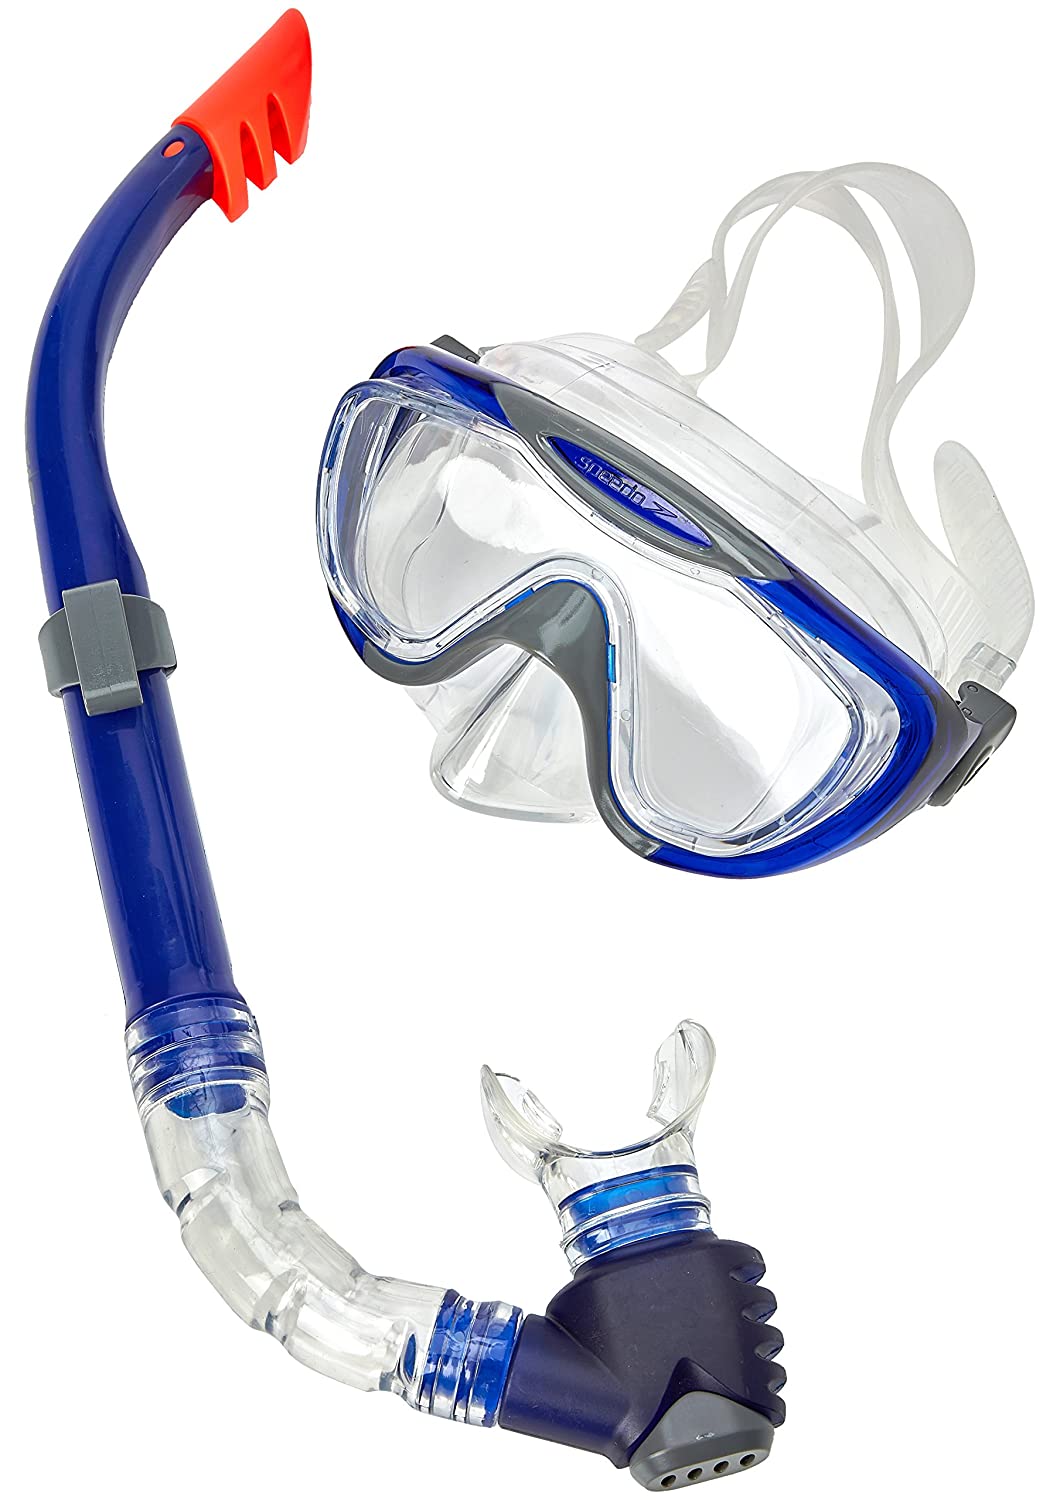 Speedo Unisex-Adult Glide Mask & Snorkel Set - Best Price online Prokicksports.com